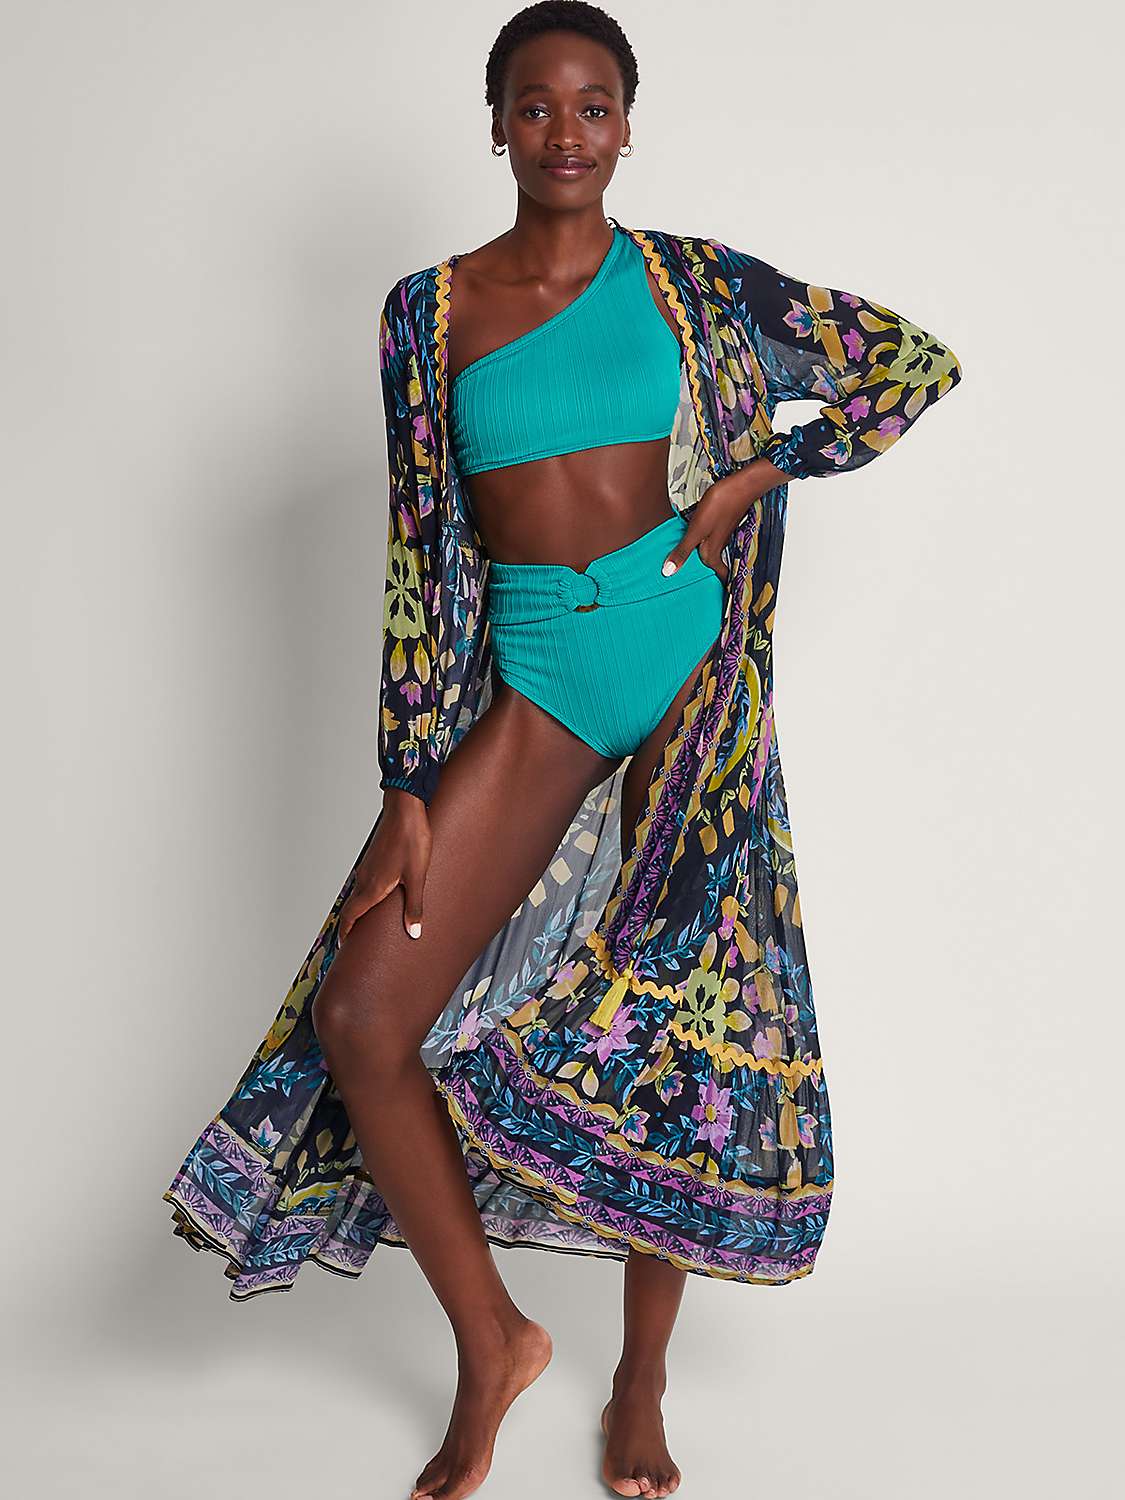 Buy Monsoon Tori Textured Bandeau Bikini Top, Turquoise Online at johnlewis.com